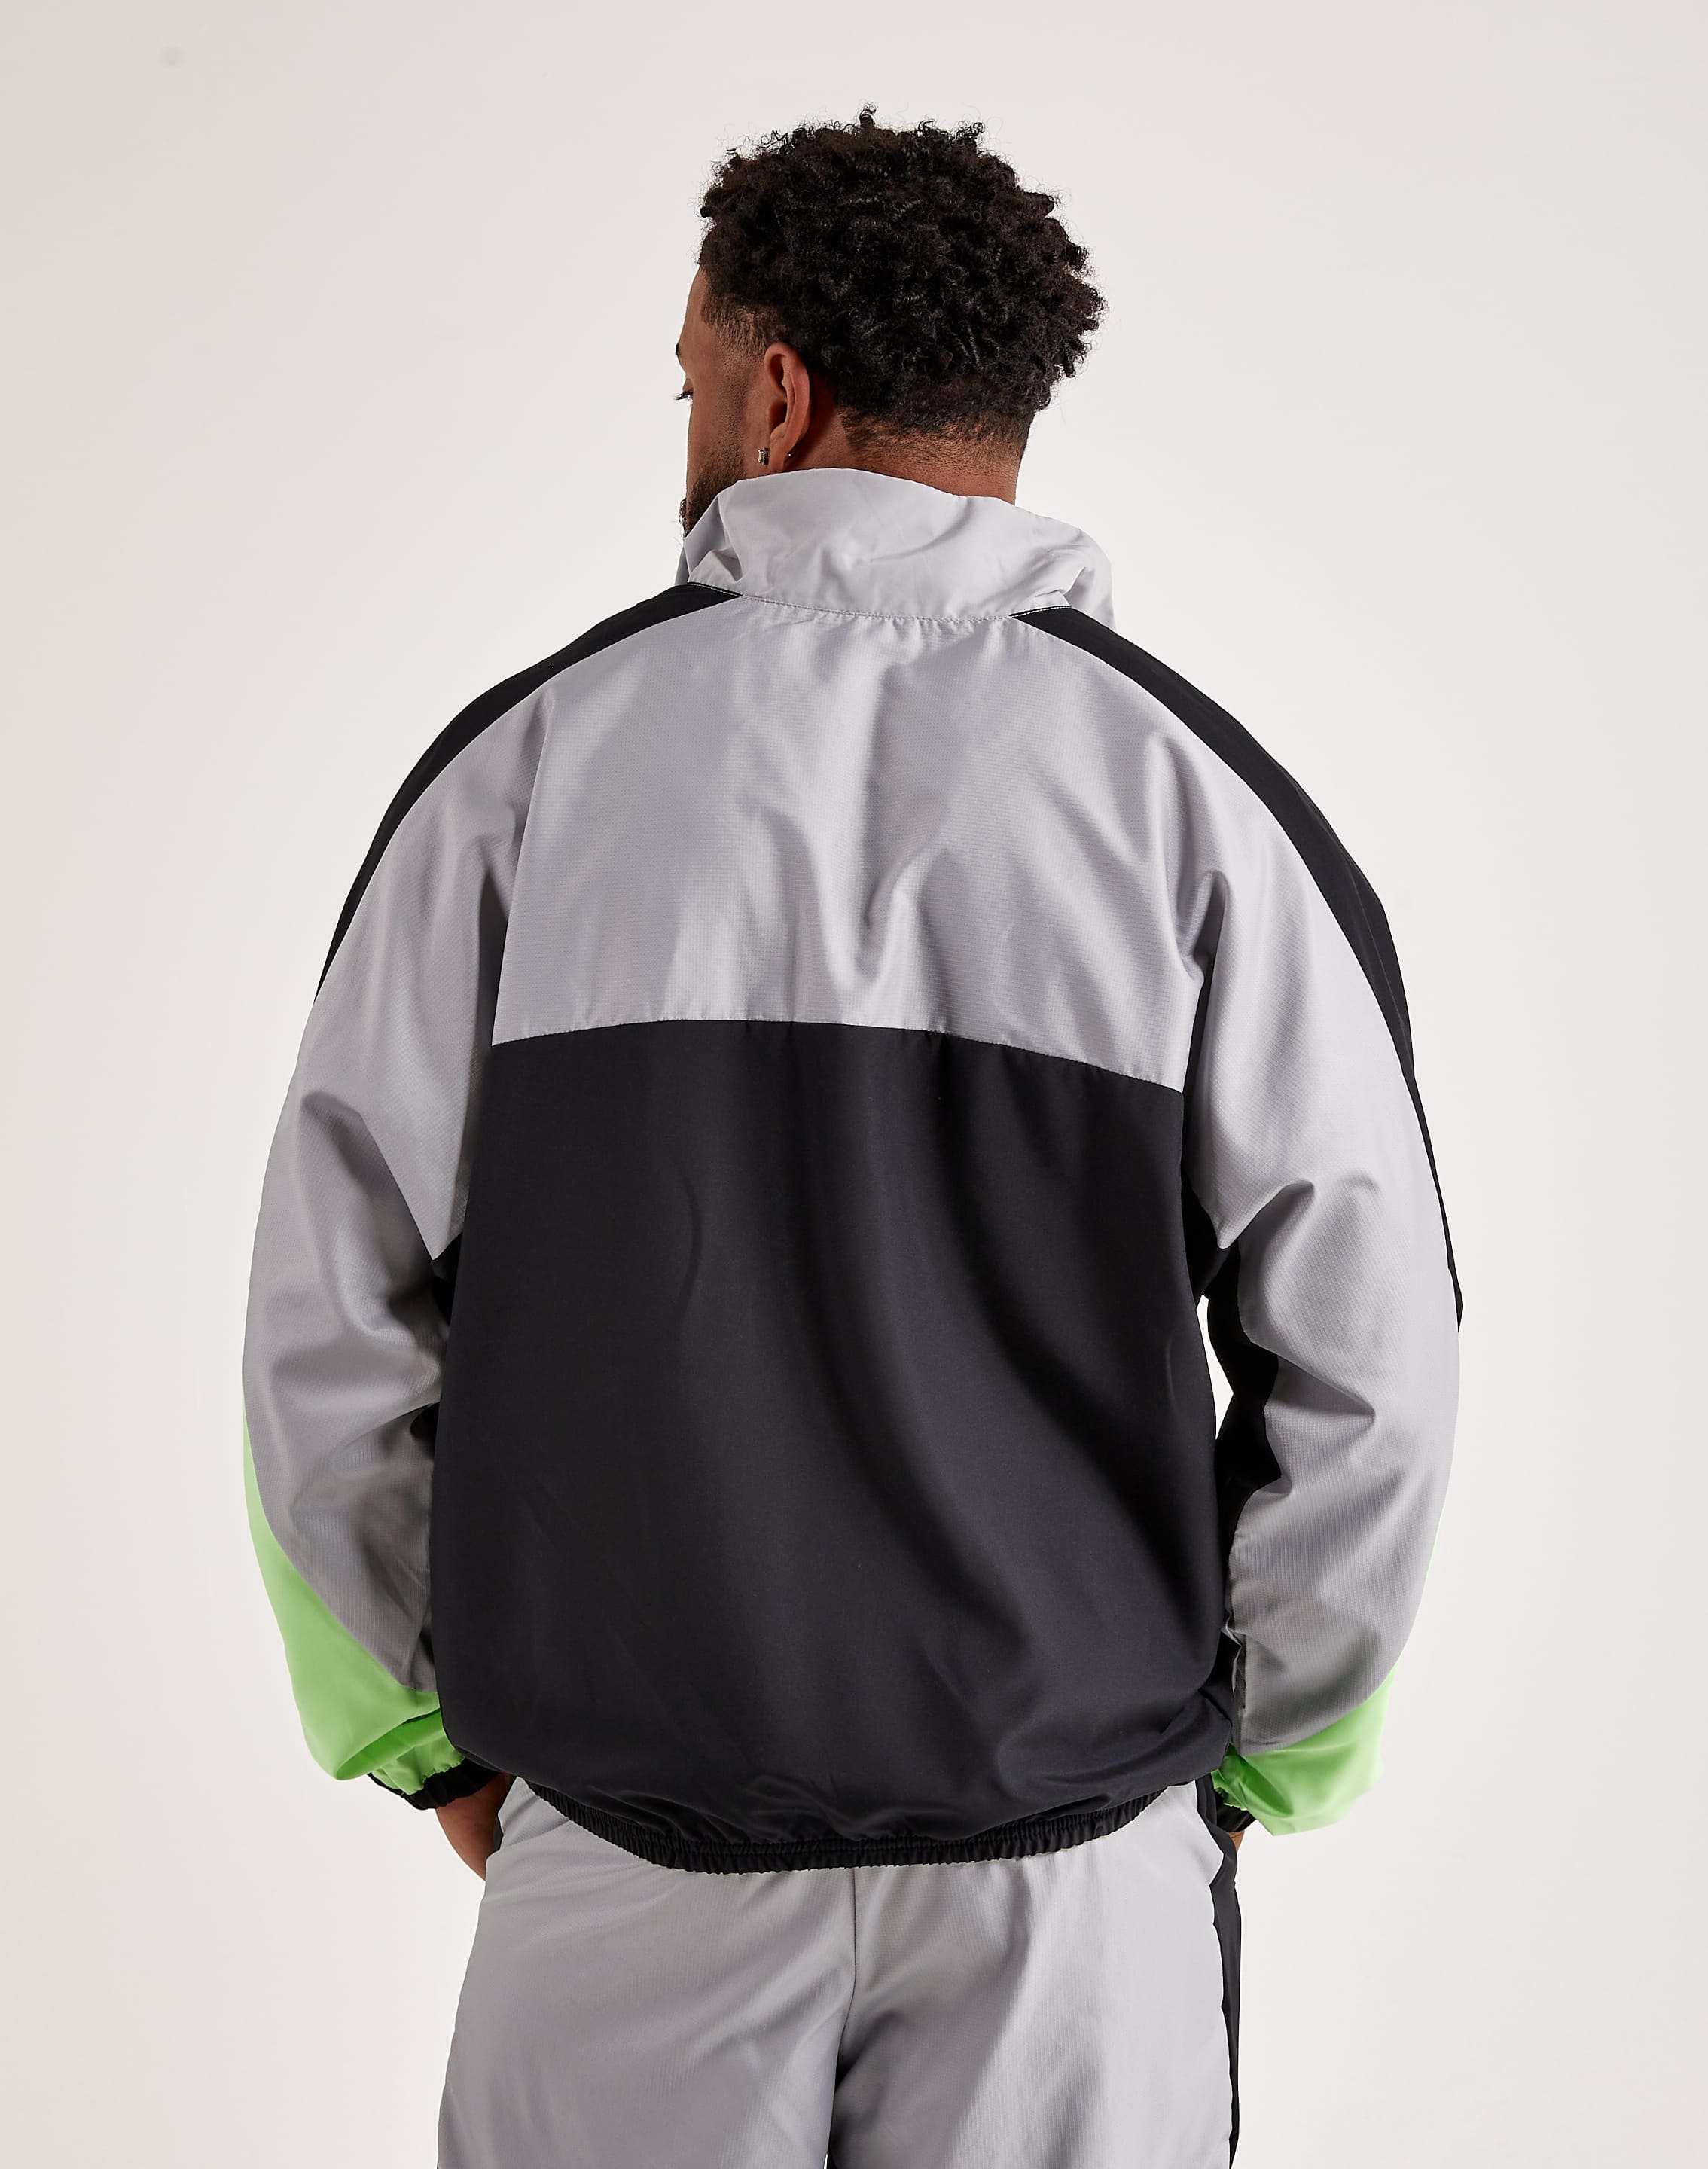 Nike Starting 5 Basketball Jacket – DTLR